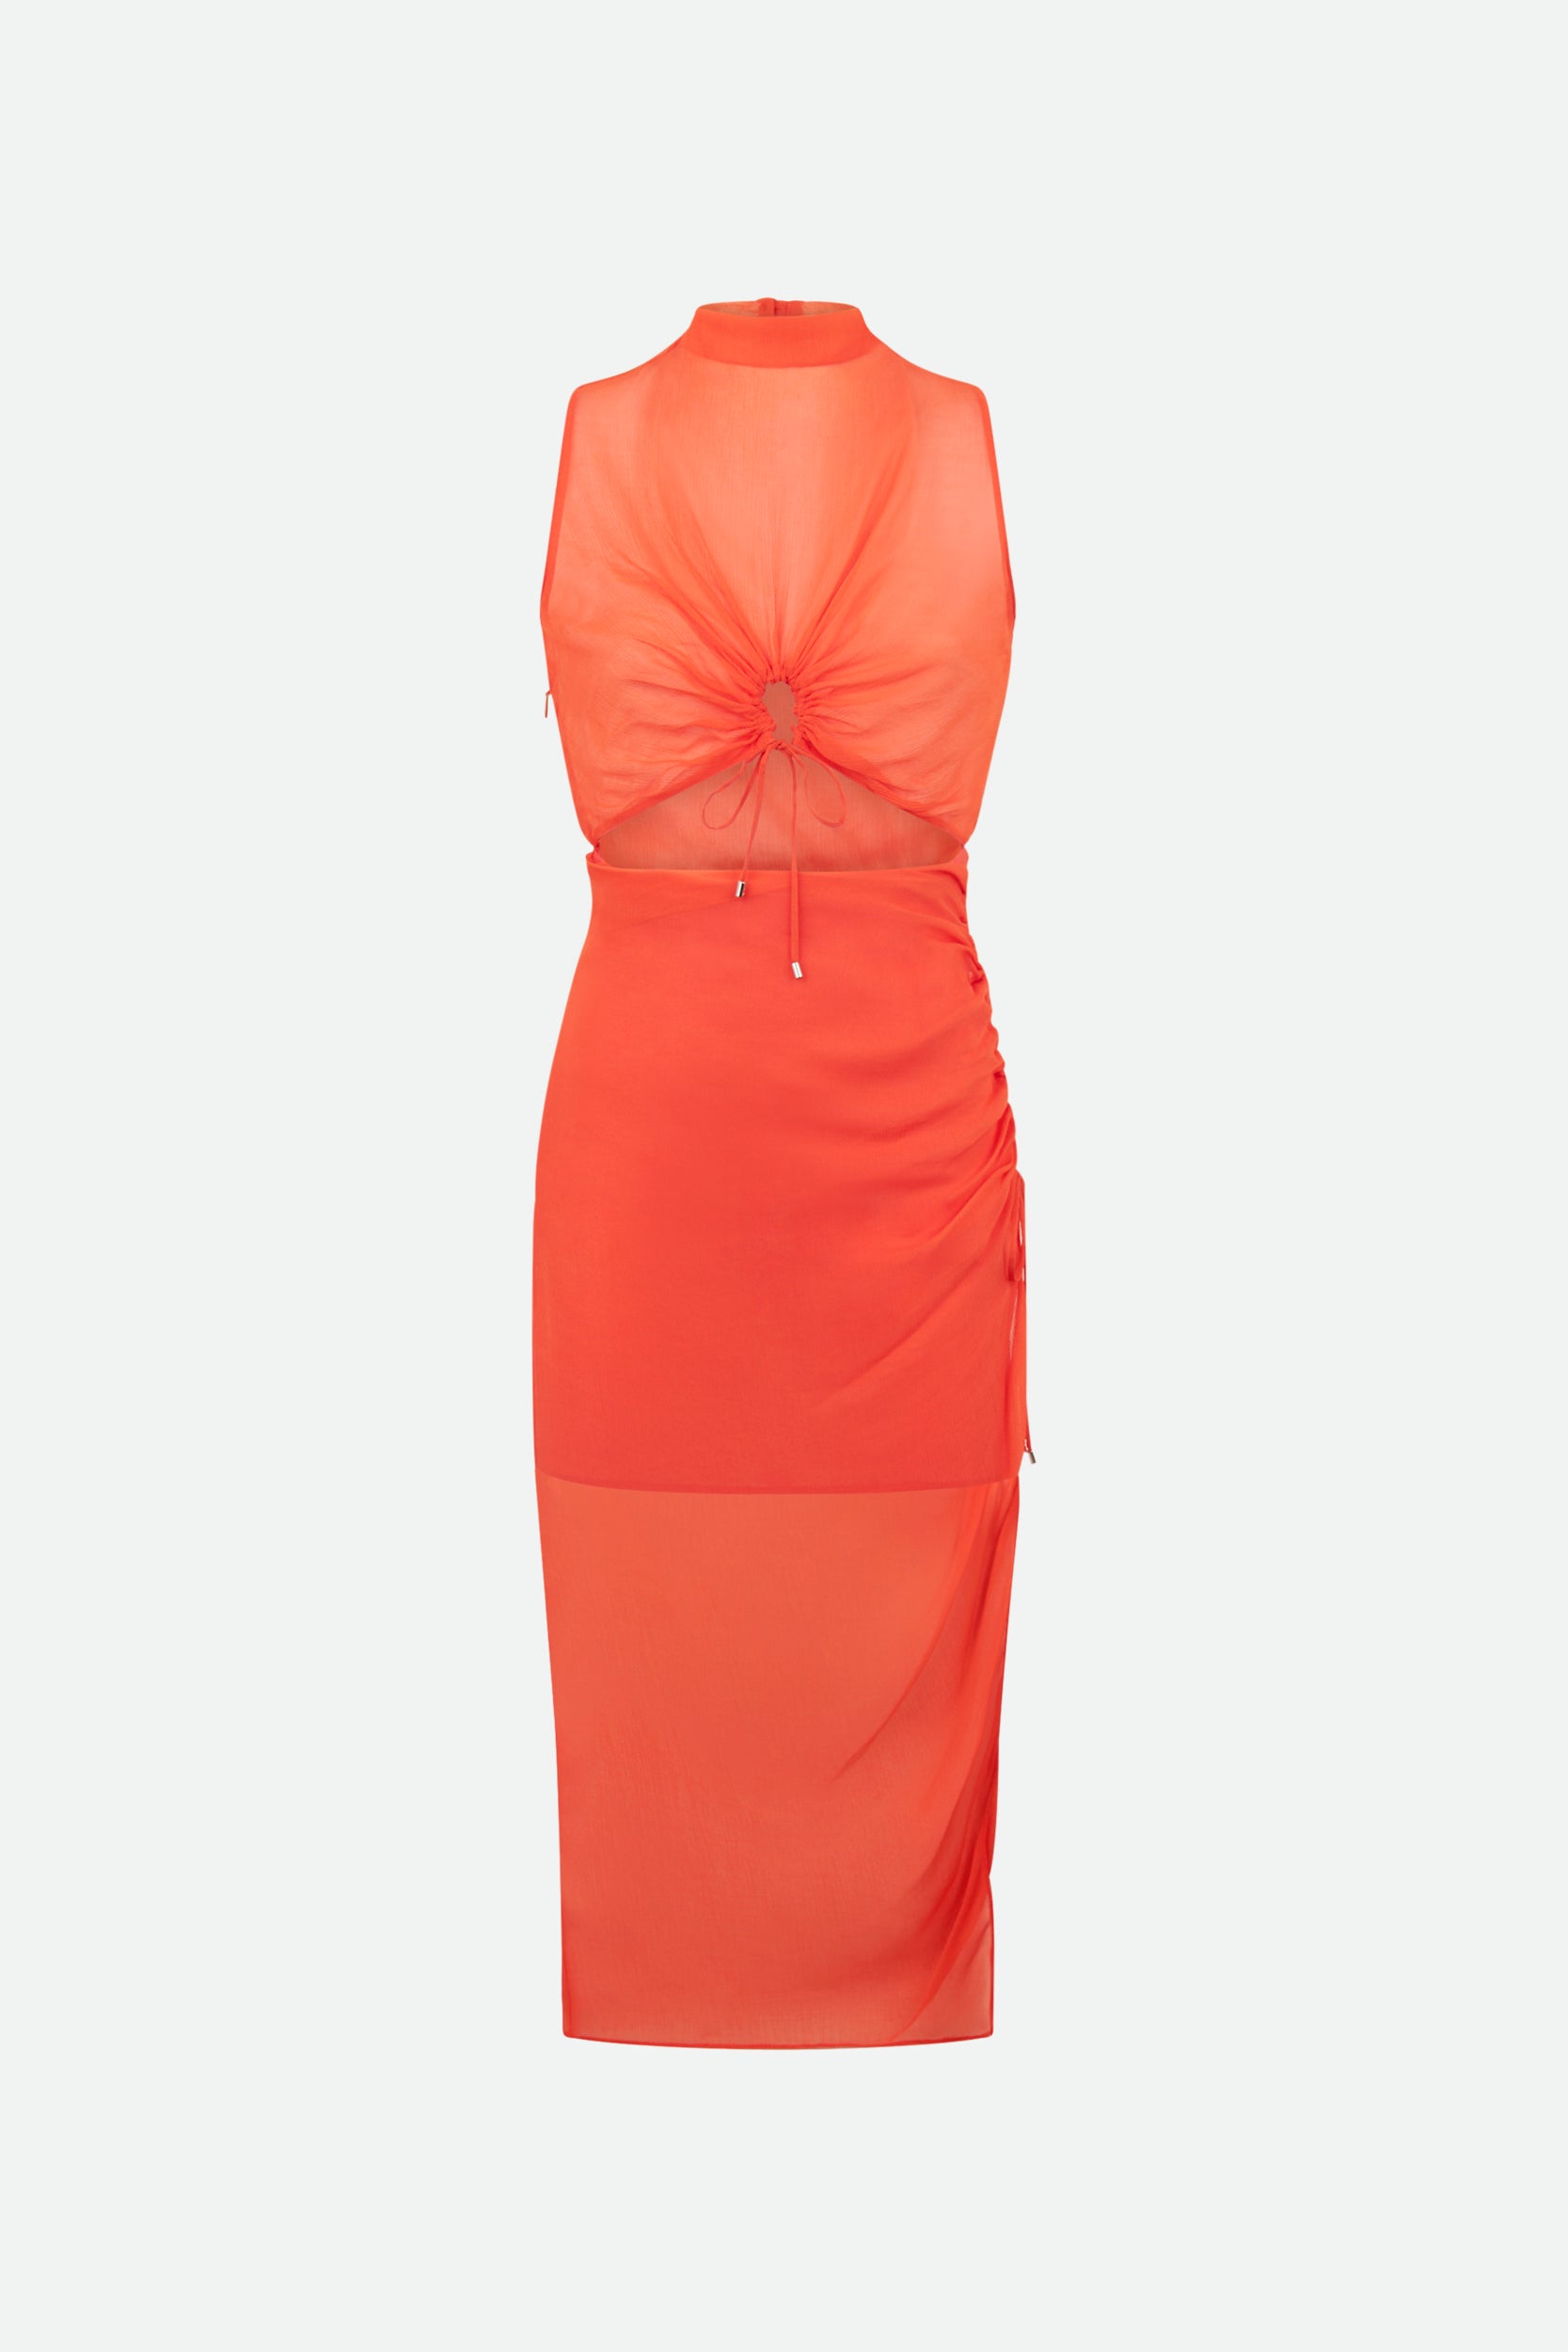 Patrizia Pepe Fluo Orange Dress